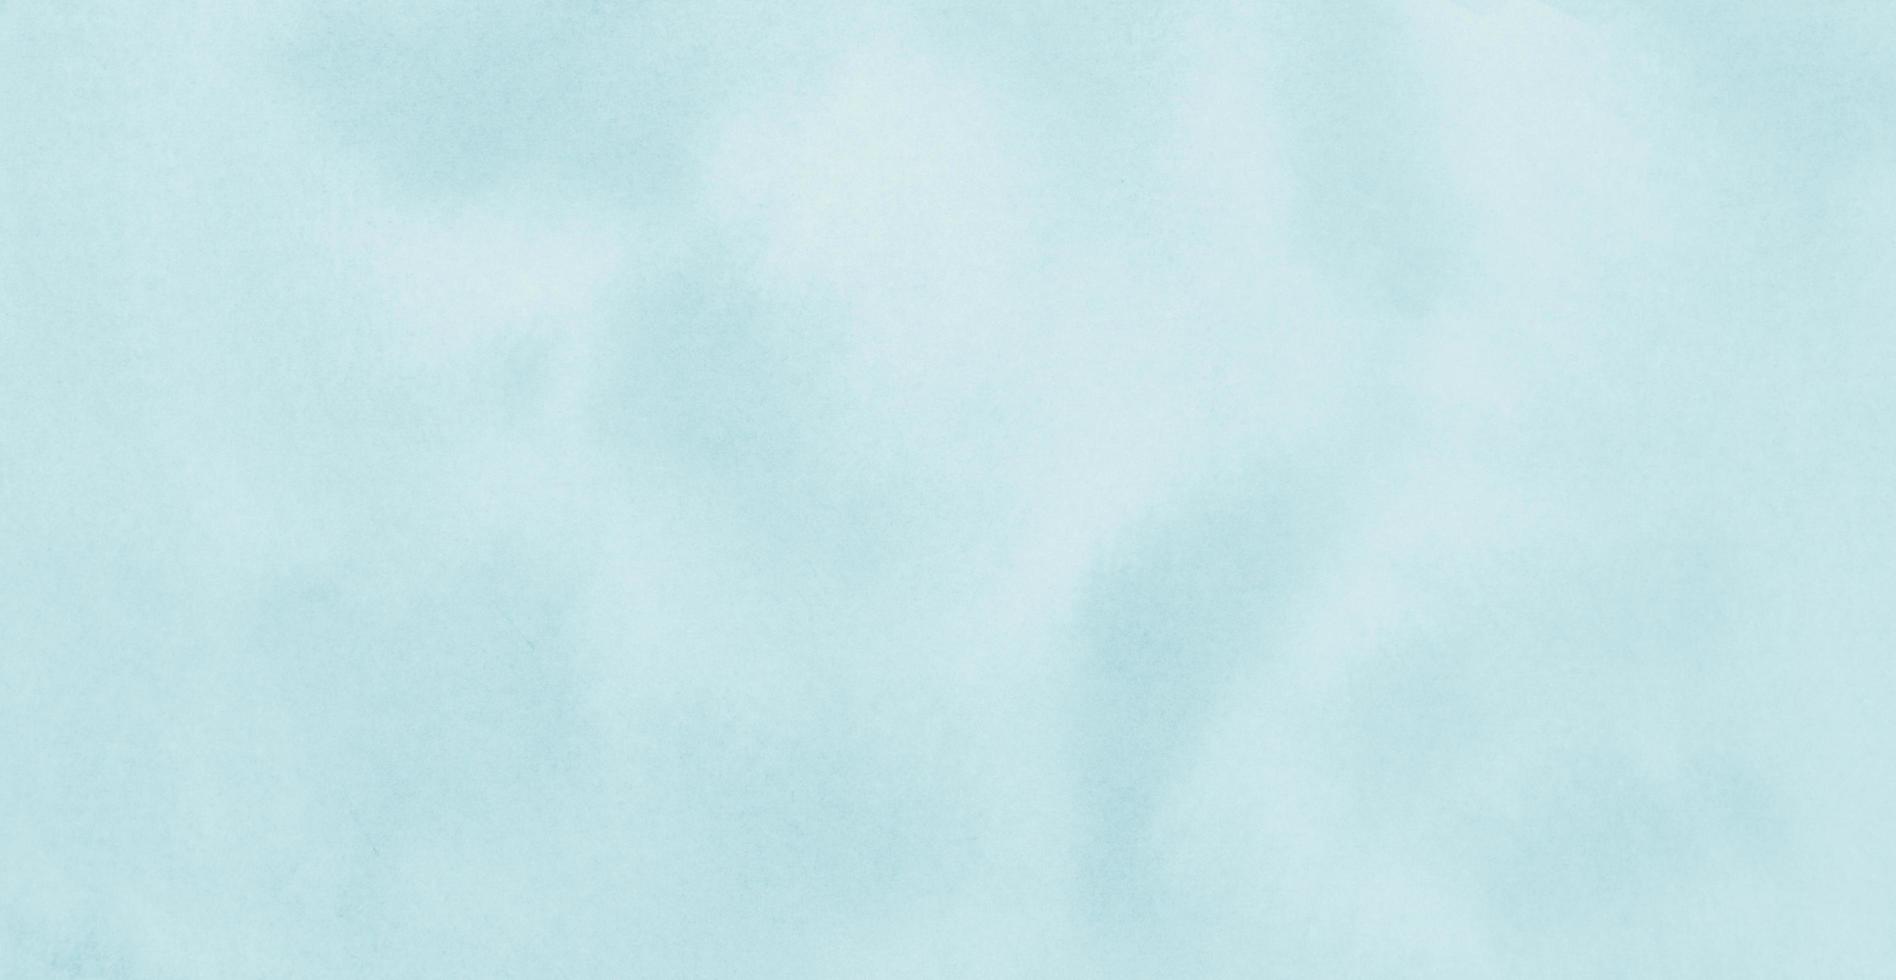 Fondo de textura de acuarela azul cielo pastel. 2254523 Foto de stock en  Vecteezy